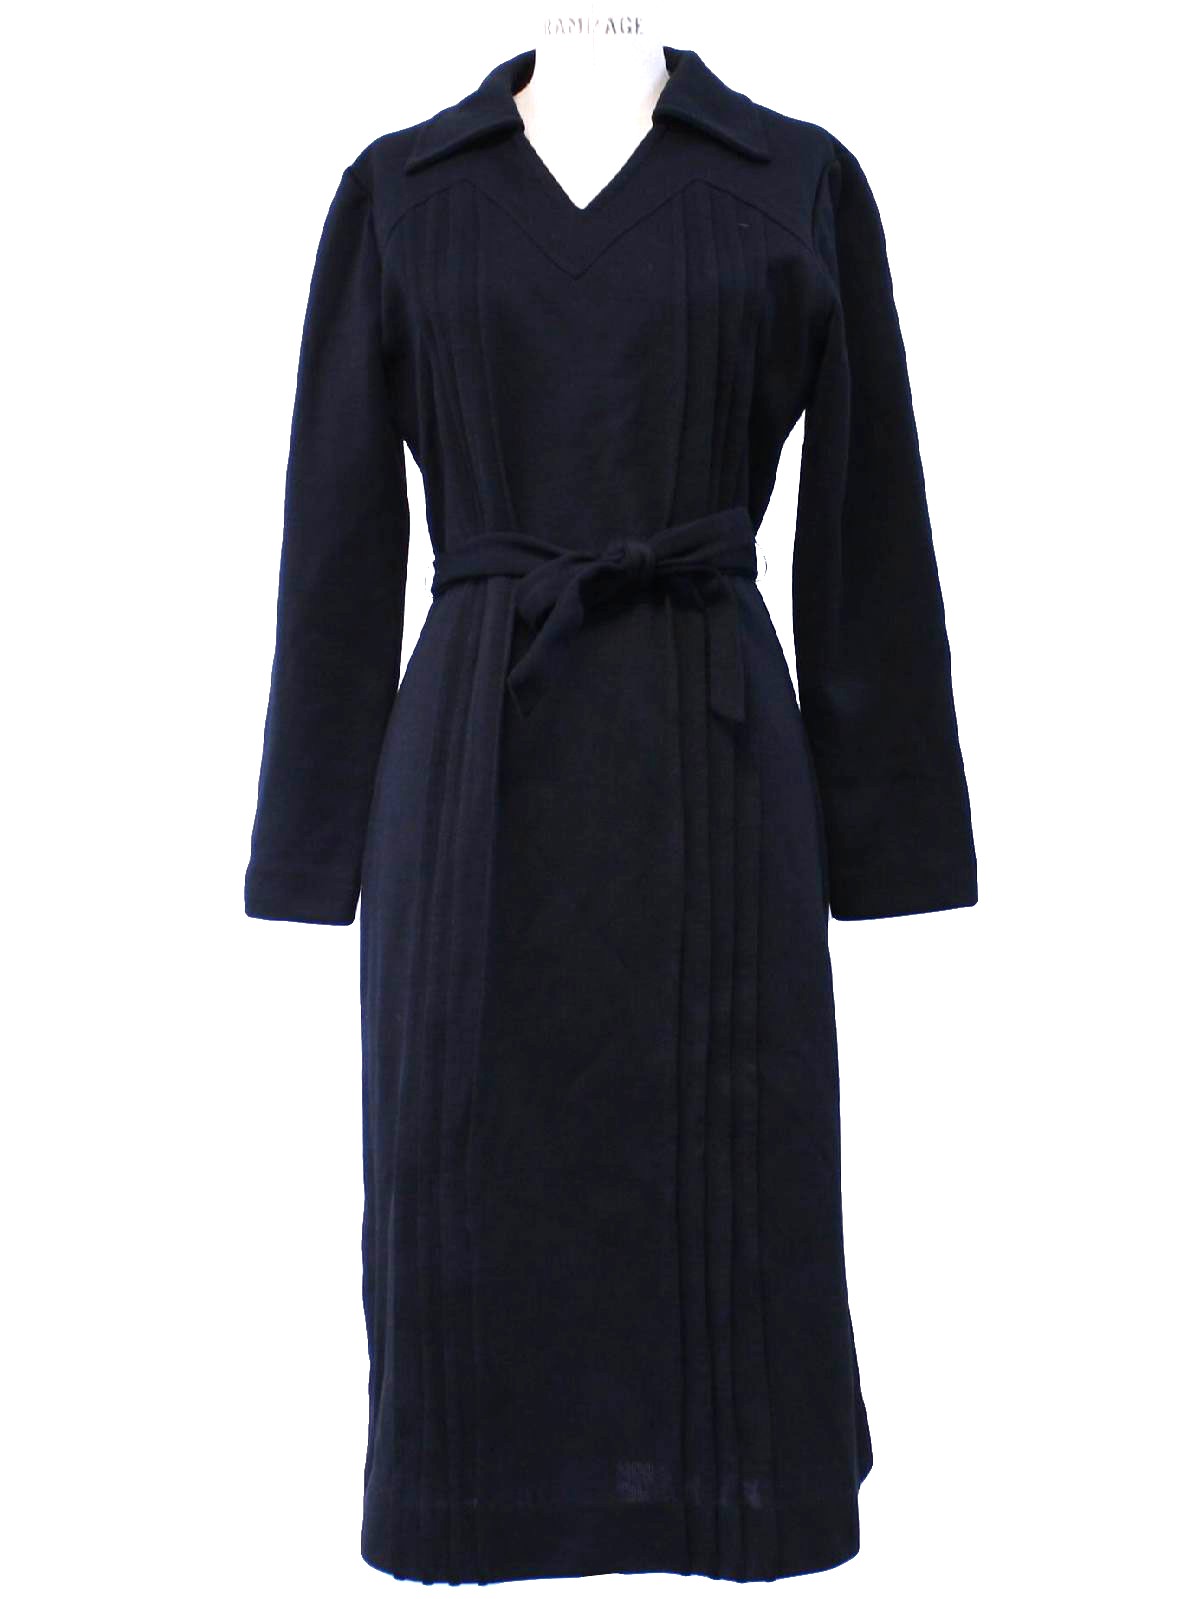 Retro 70s Dress (Bleeker Street) : 70s -Bleeker Street- Womens black ...